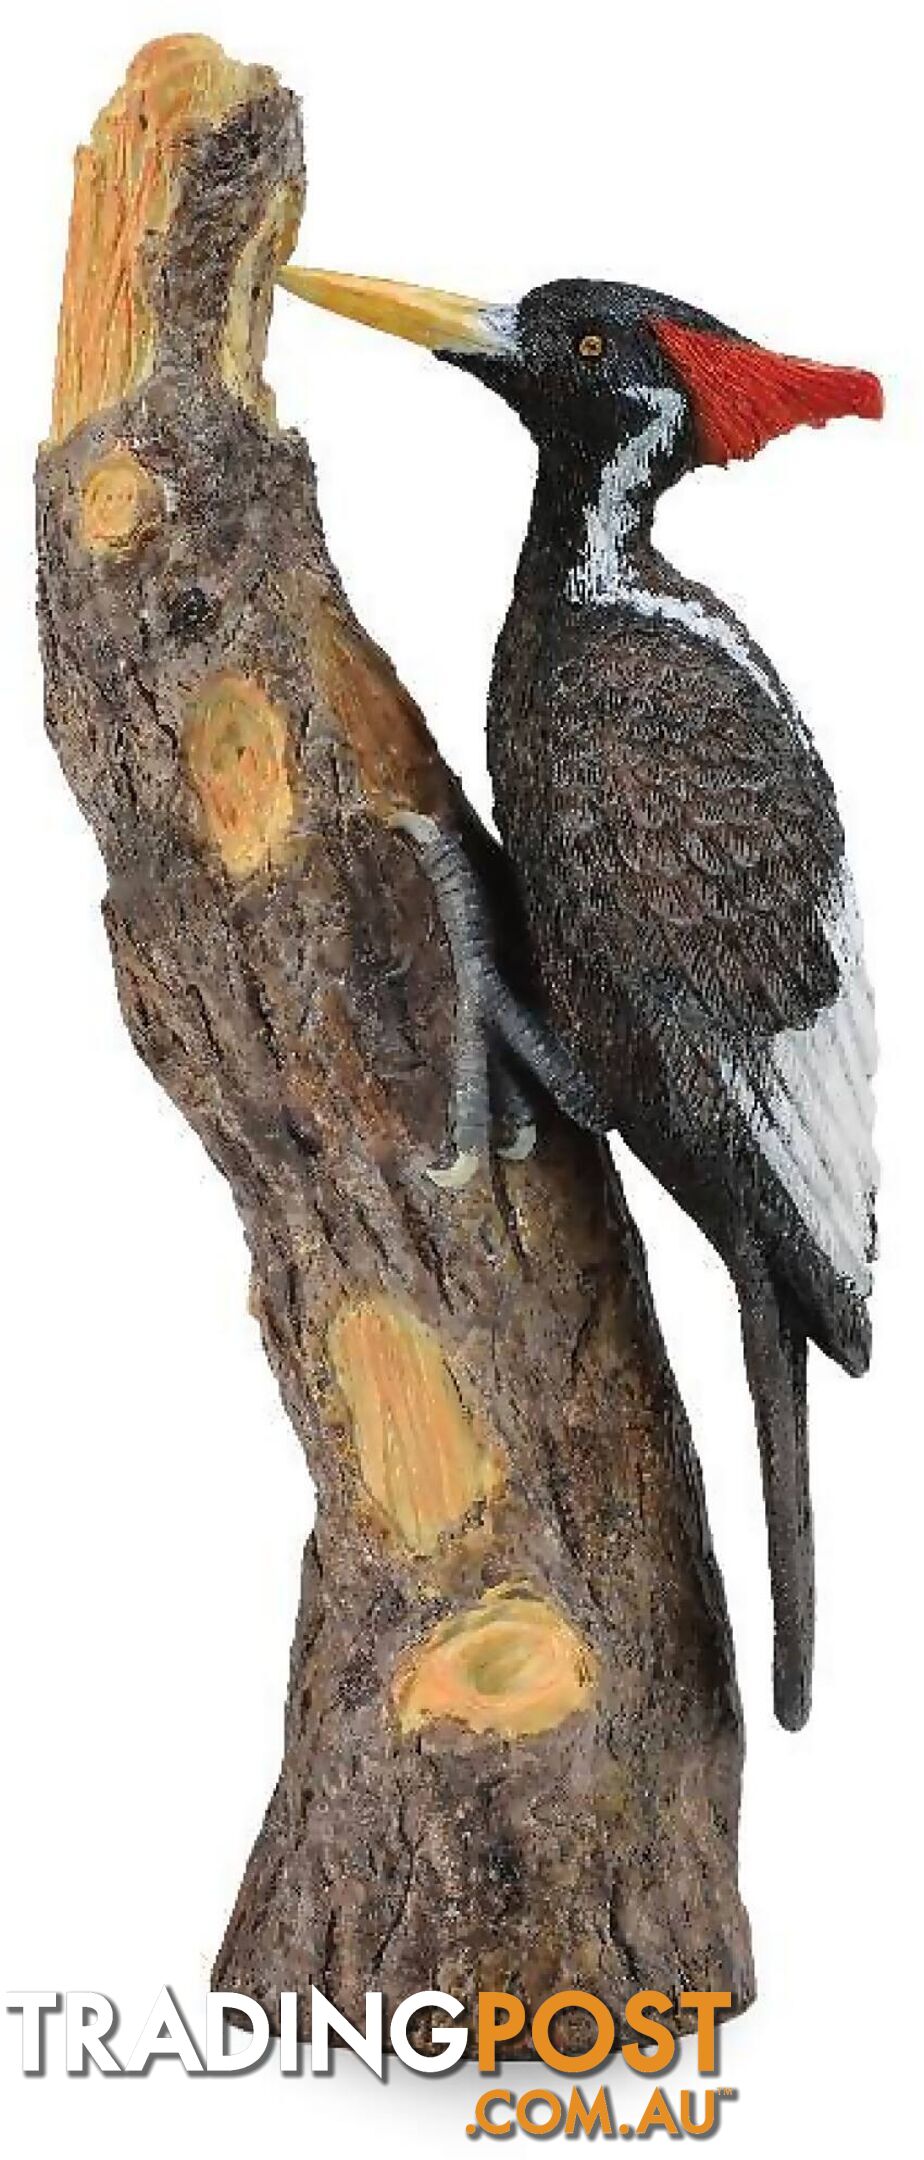 CollectA - Ivory Billed Woodpecker Bird Figurine - Rpco88802 - 4892900888026